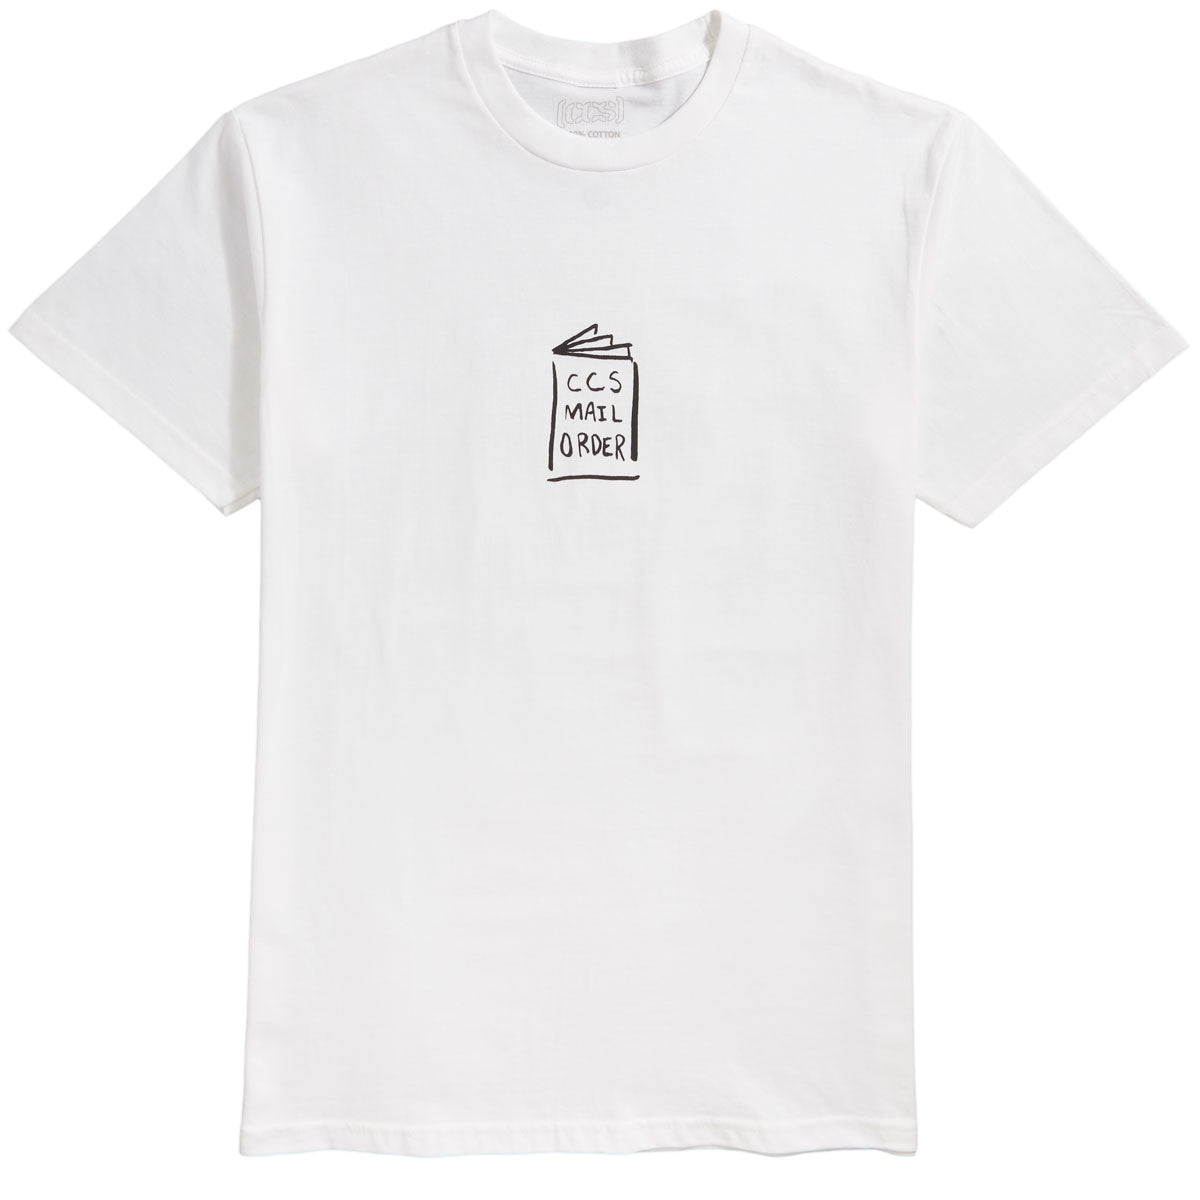 CCS Catalog Sketch T-Shirt - White/Black